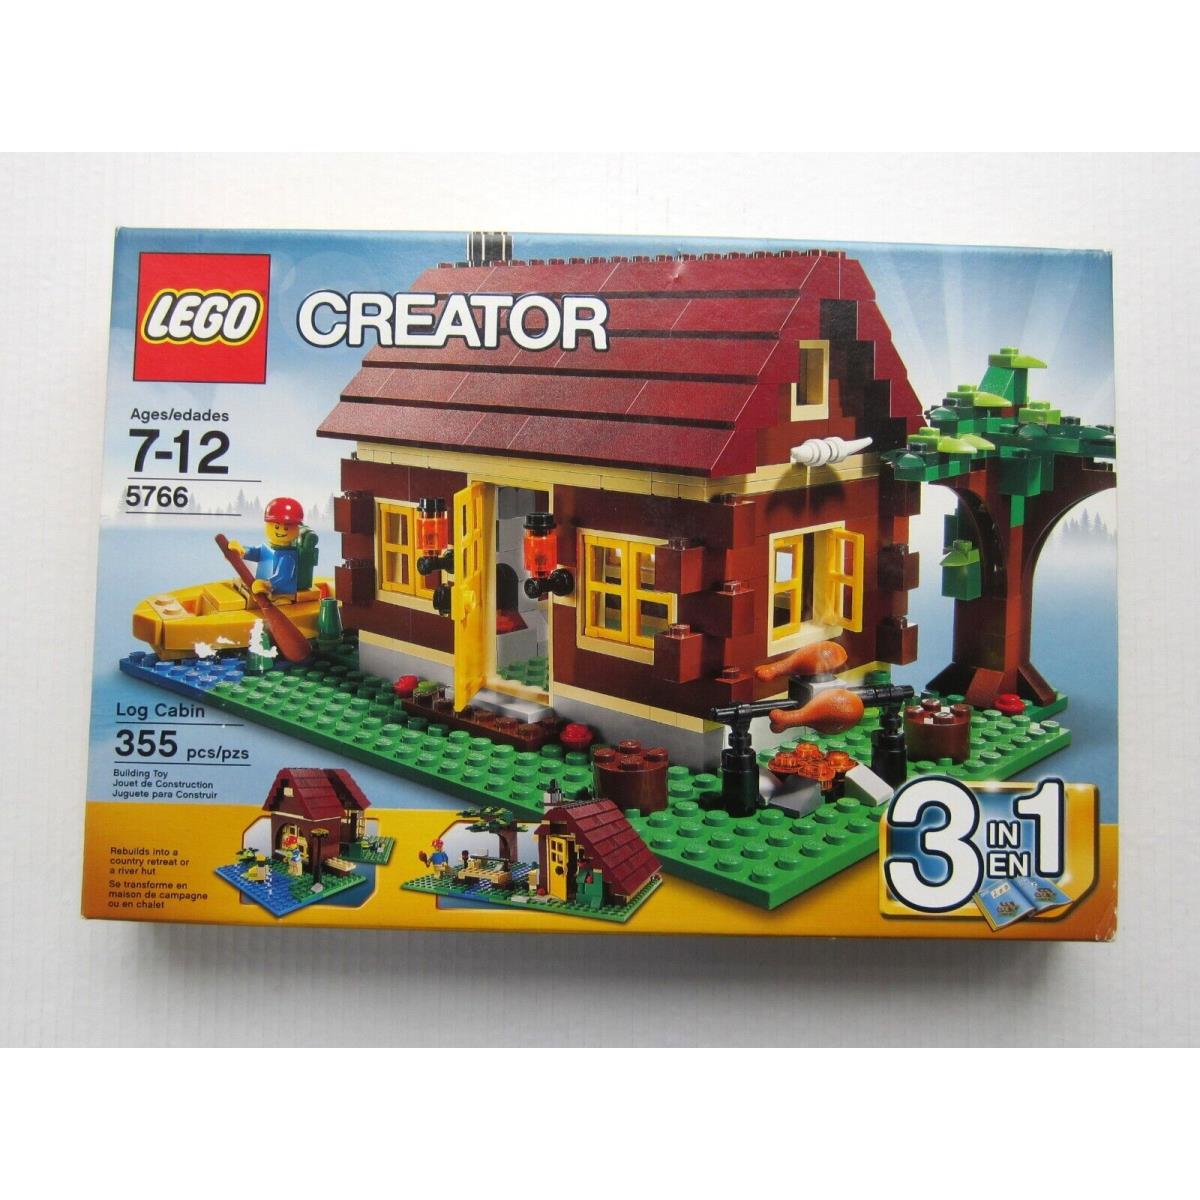 Lego Creator Set 5766 Log Cabin 3 in 1 Build Retired